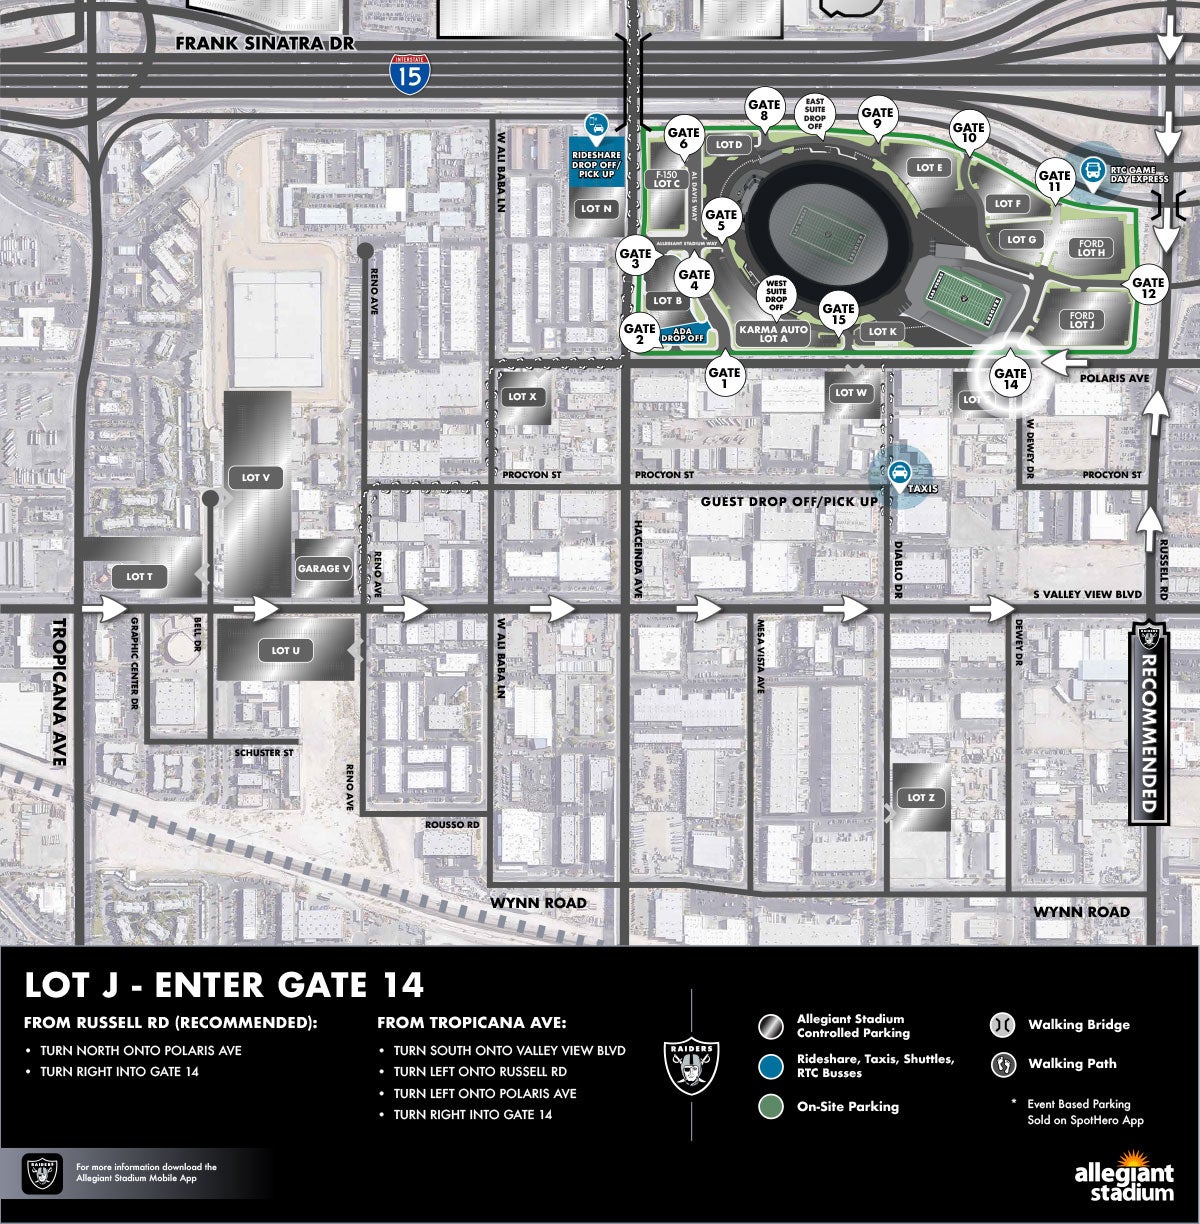 Lot J Parking Map - Enter Gate 14